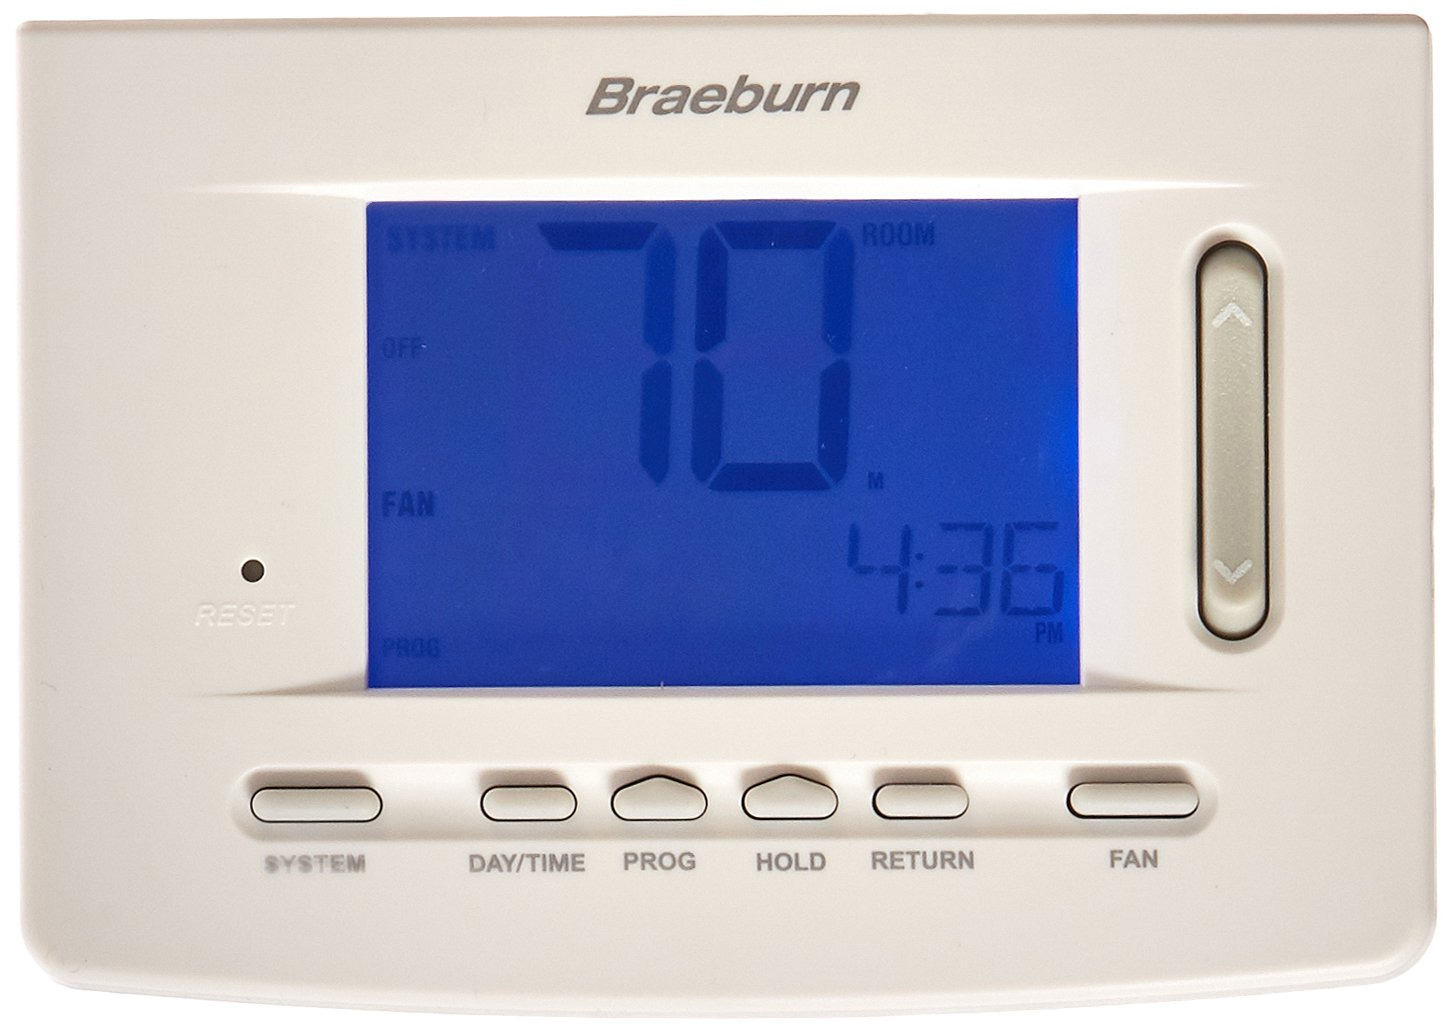 BRAEBURN 5020 Thermostat, Universal 7, 5-2 Day or Non-Programmable, 1H/1C